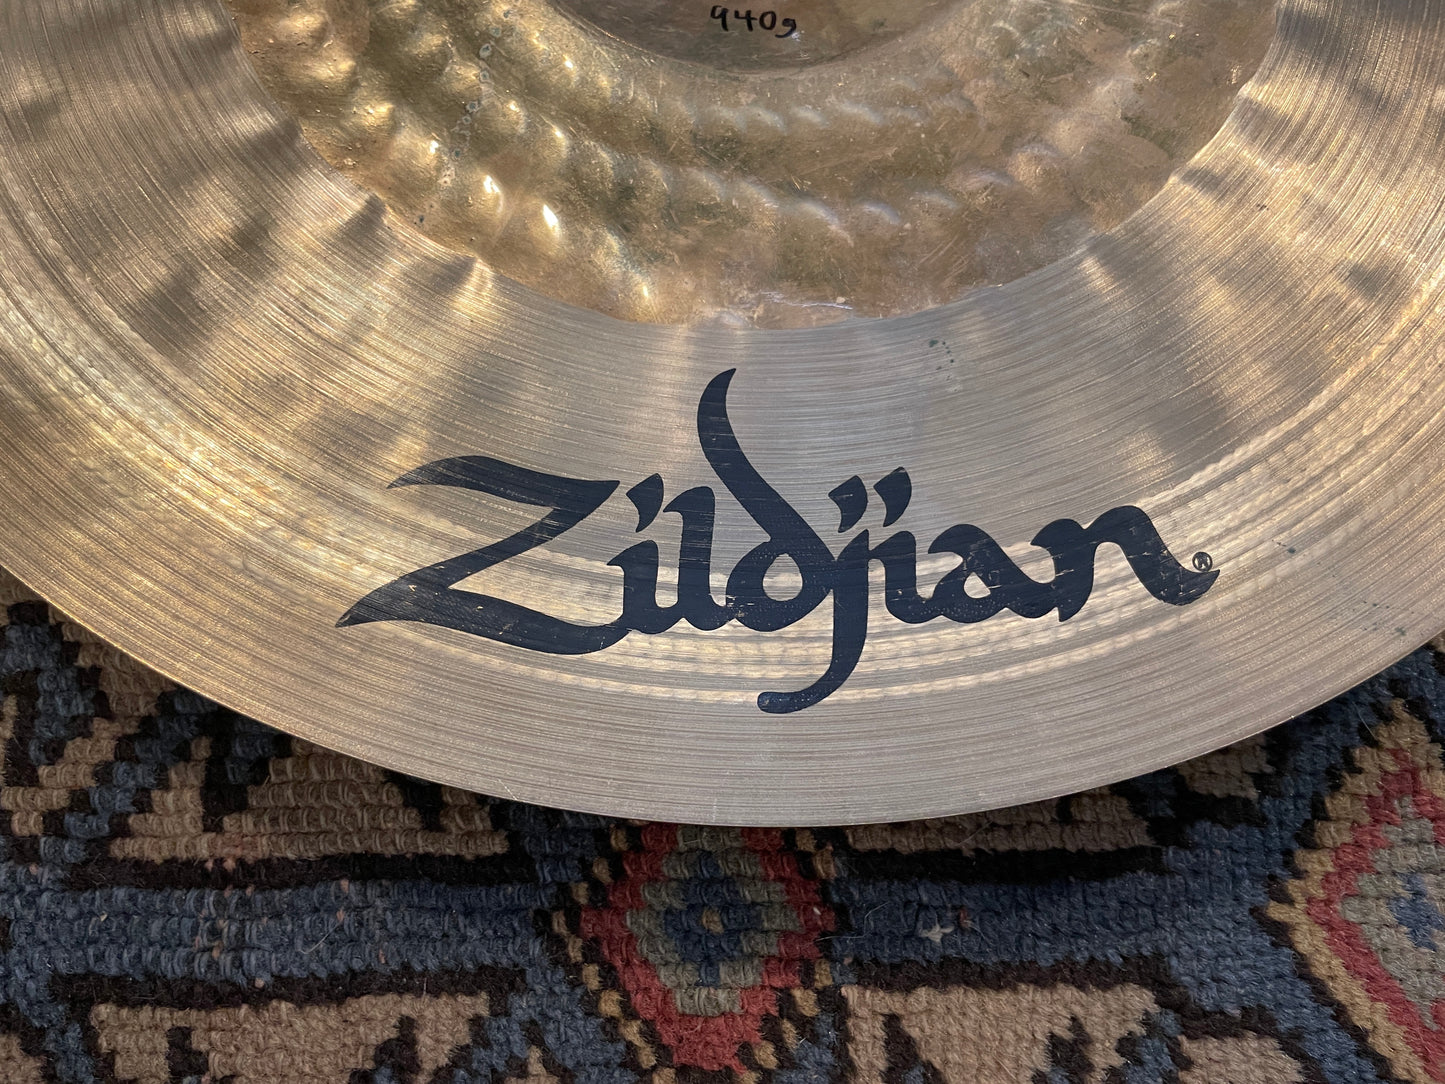 15" Zildjian K Custom Hybrid Trash Crash Cymbal 940g